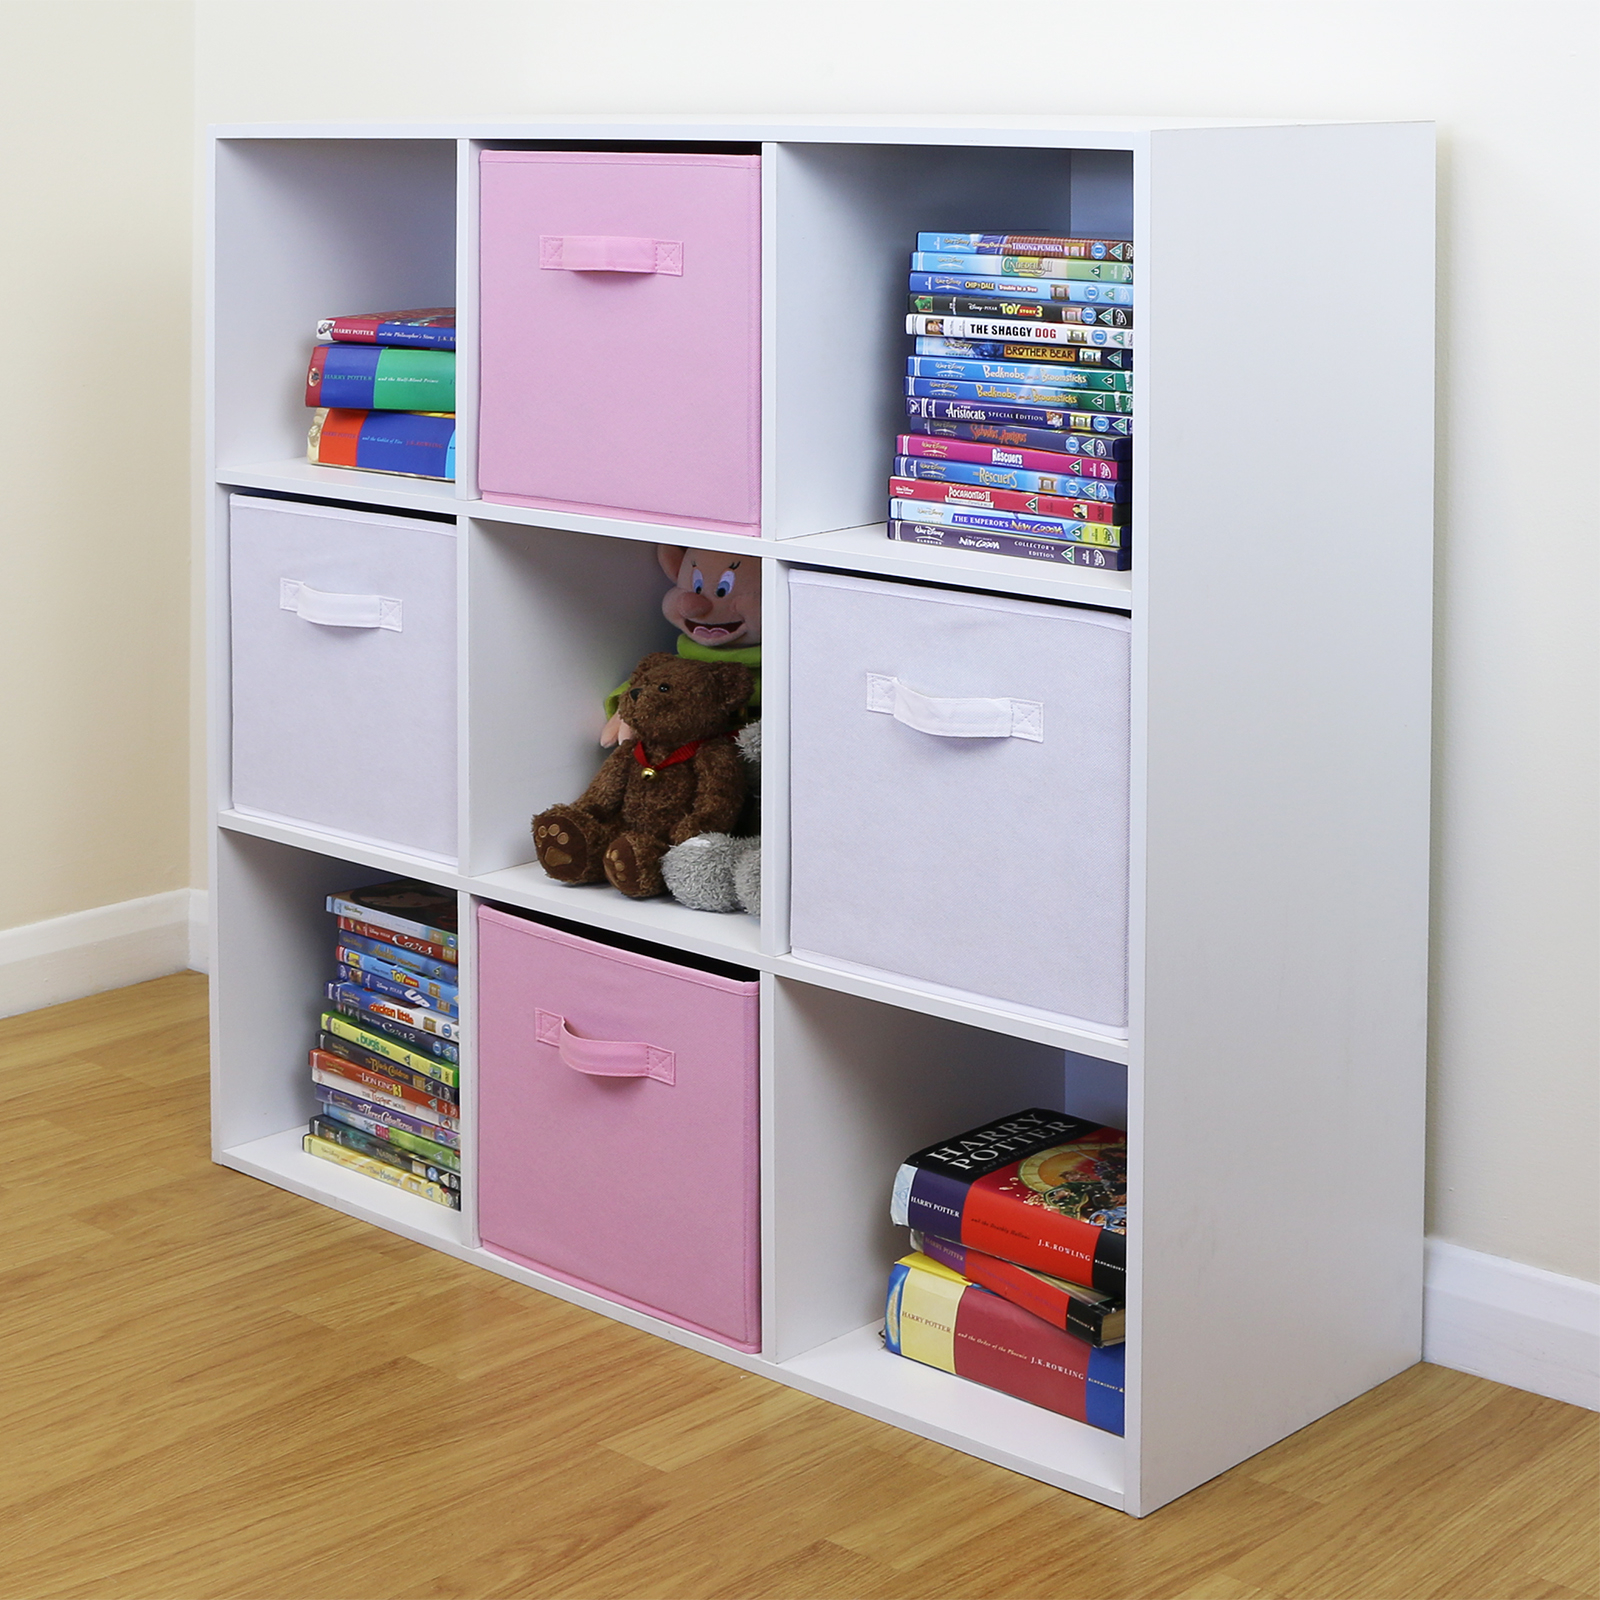 Details About 9 Cube Kids Pink White Toygames Storage Unit Girlsboys Bedroom Shelvesboxes regarding size 1600 X 1600